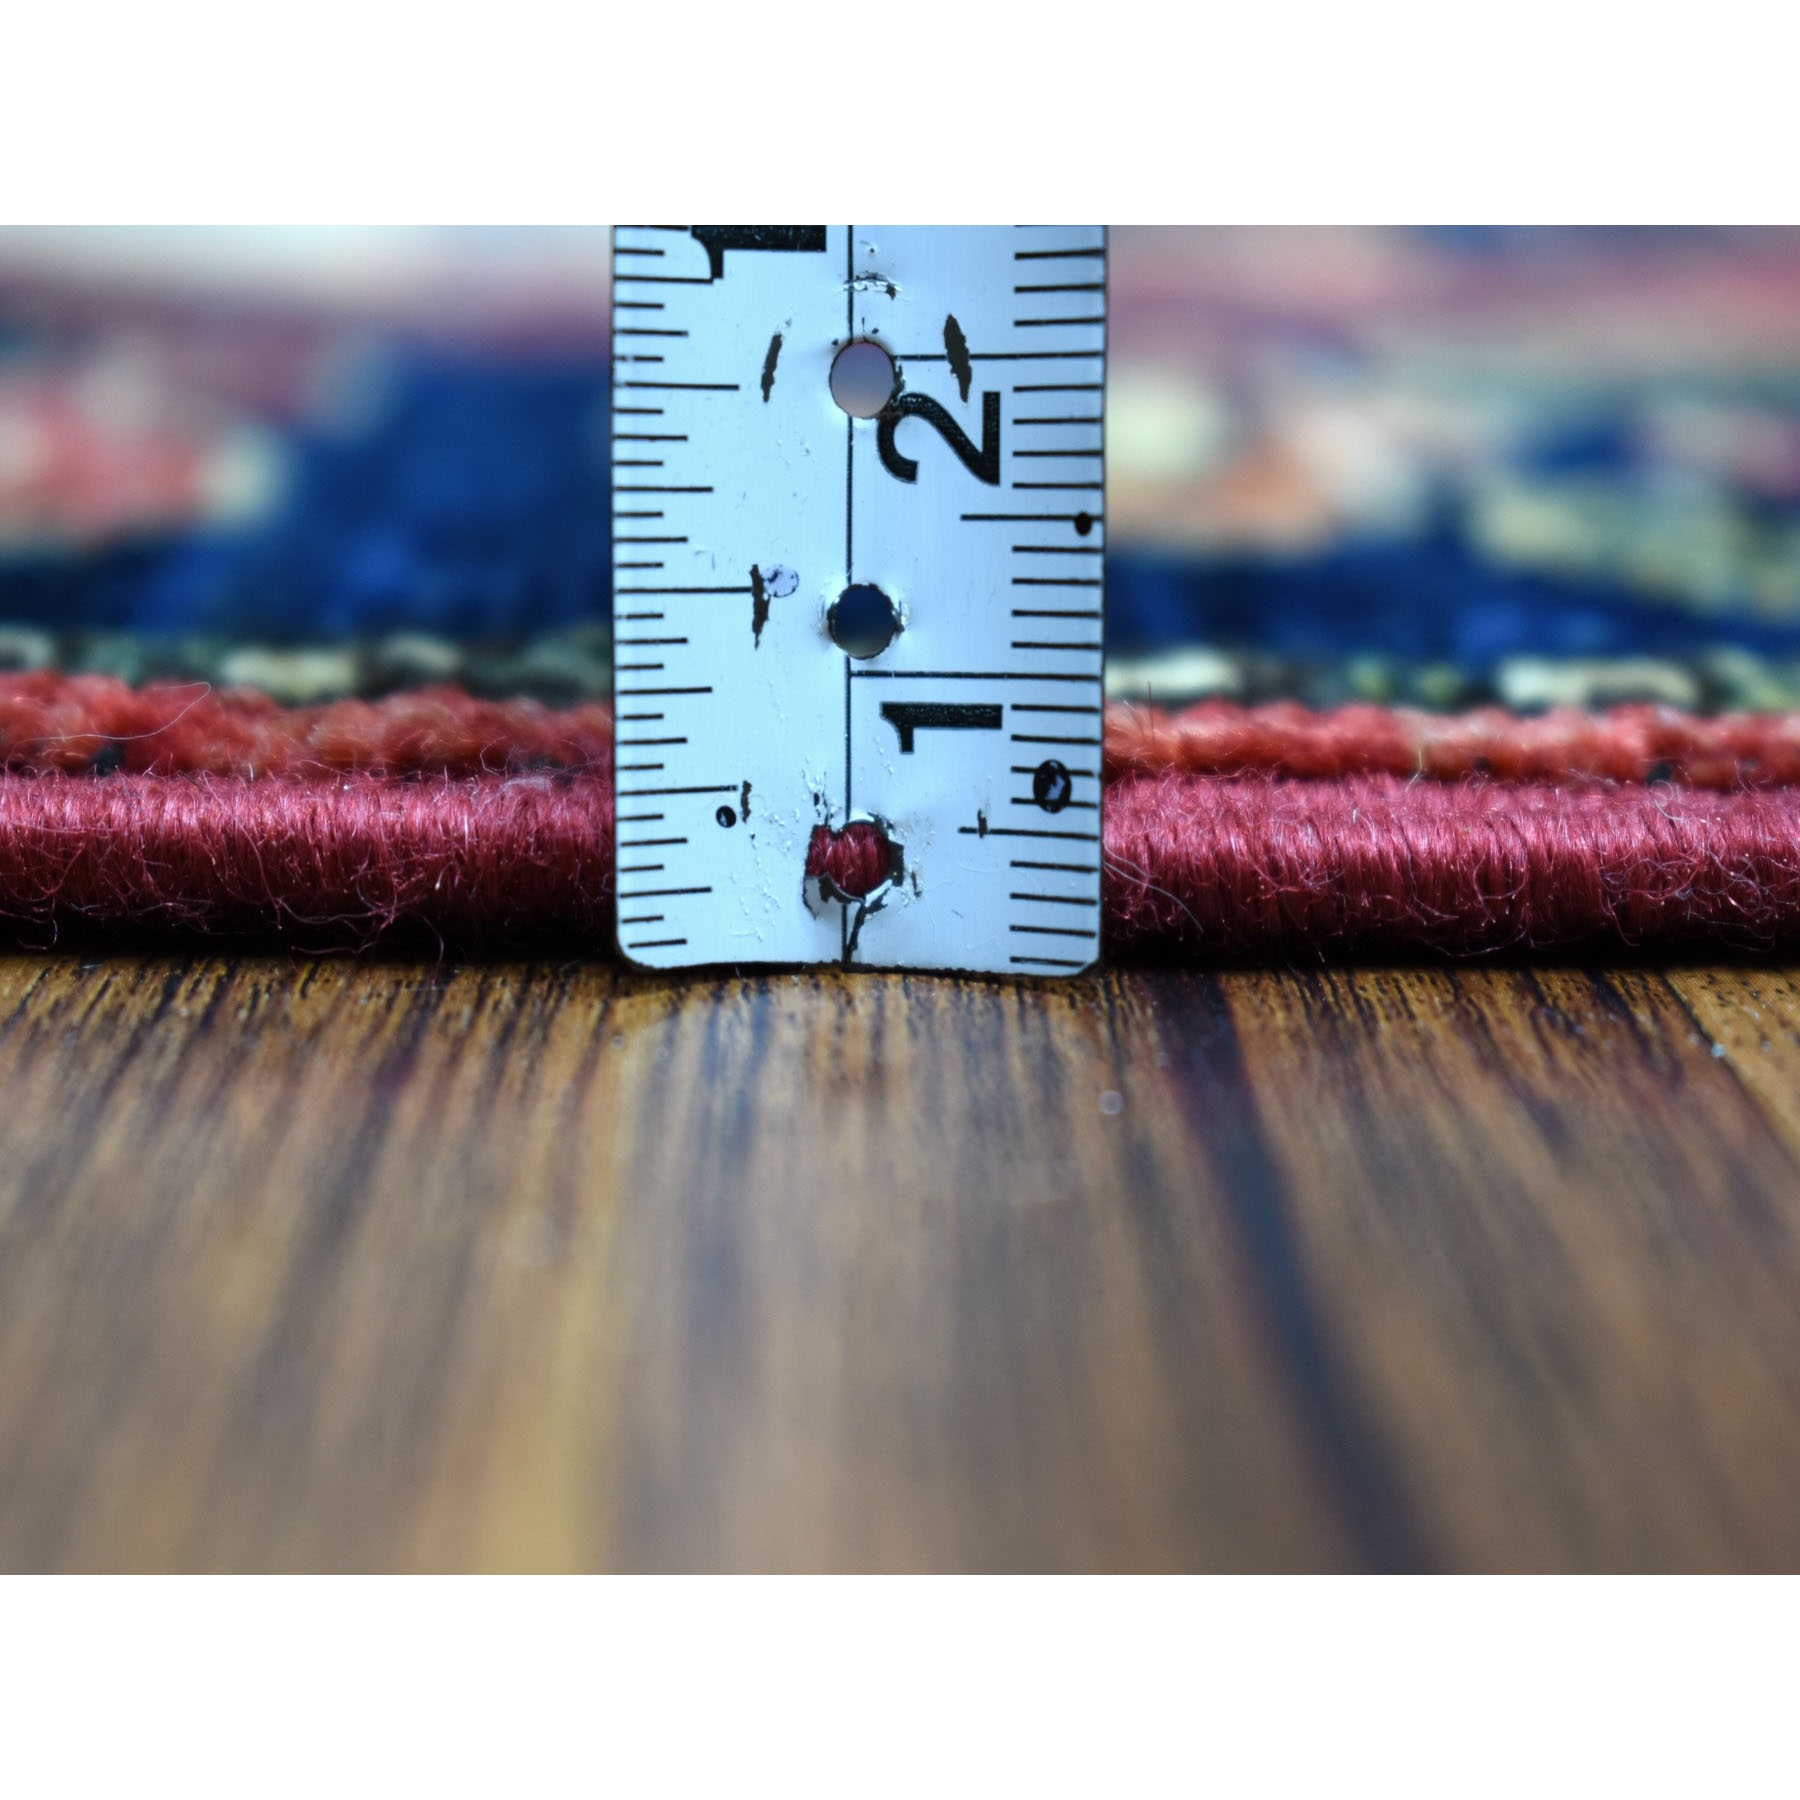 4'x10'2" Red Afghan Turkoman Ersari Wide Runner Tekke Design Hand Woven Pure Wool Oriental Rug 